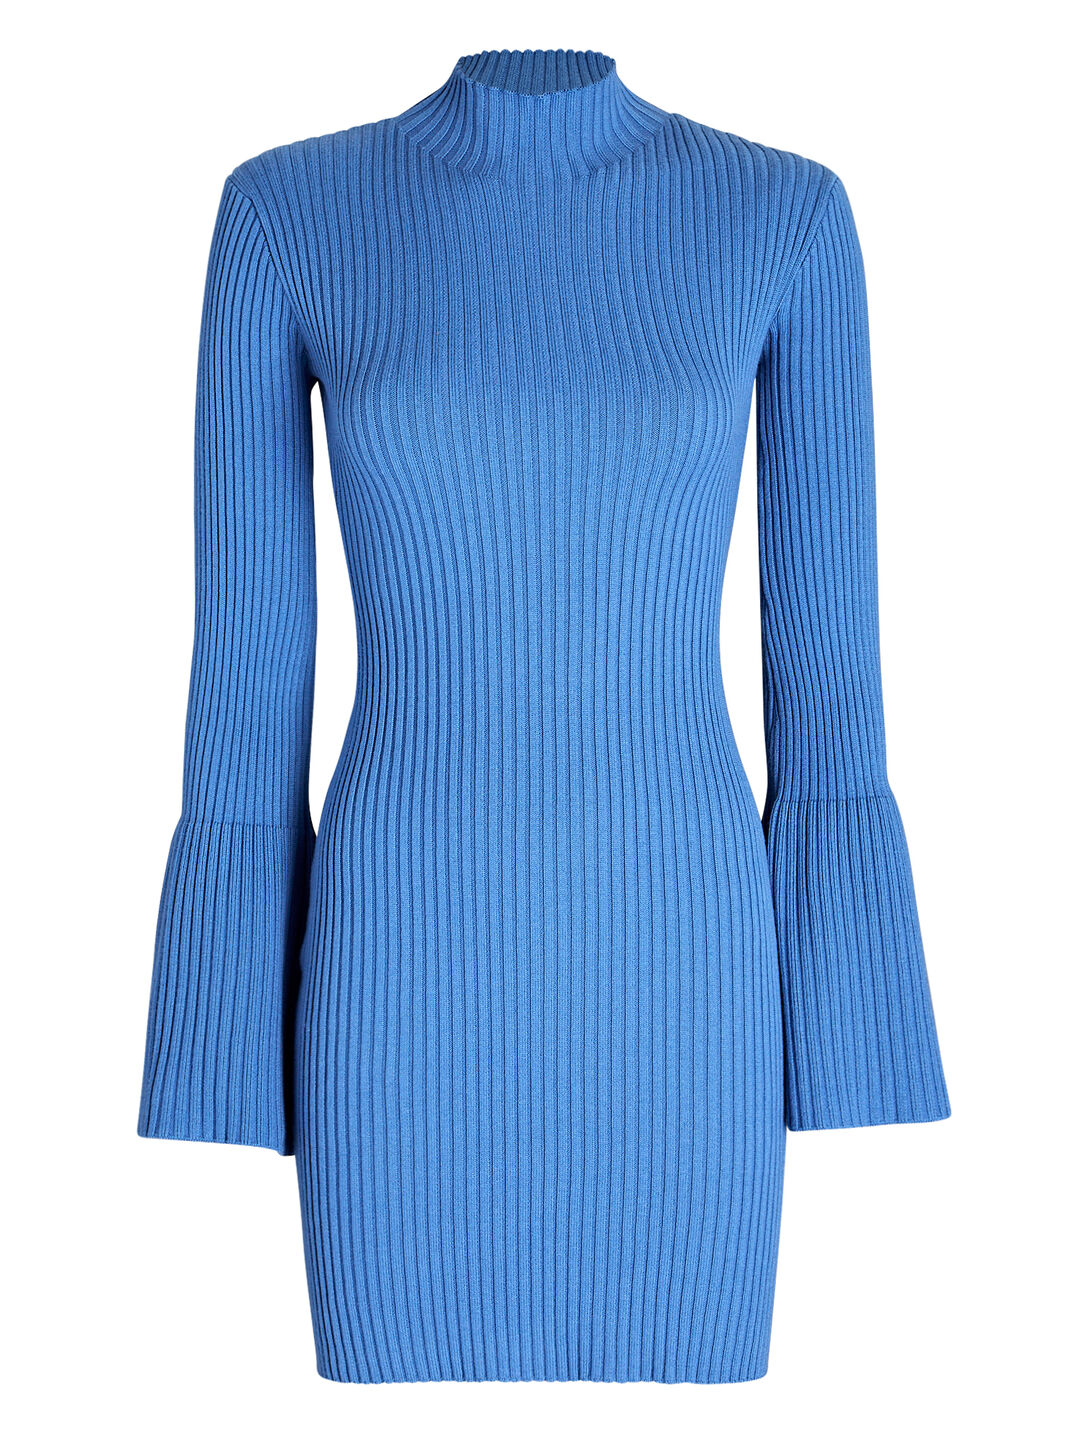 Evangeline Bell-Sleeve Knit Mini Dress